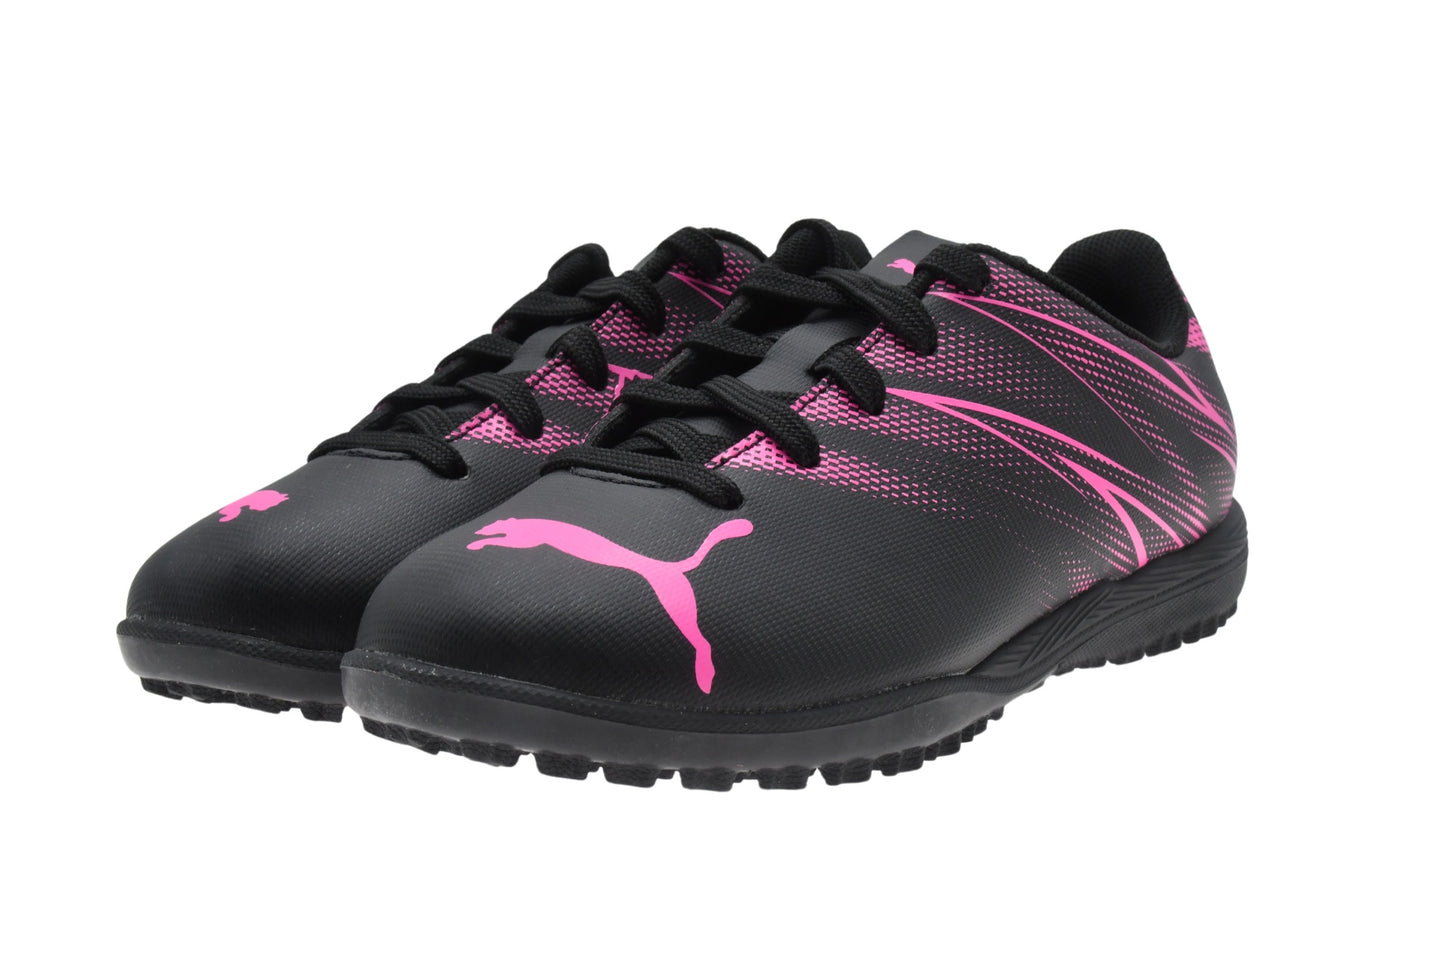 Puma Attacanto TT Football Boots - 11 - Black/Pink